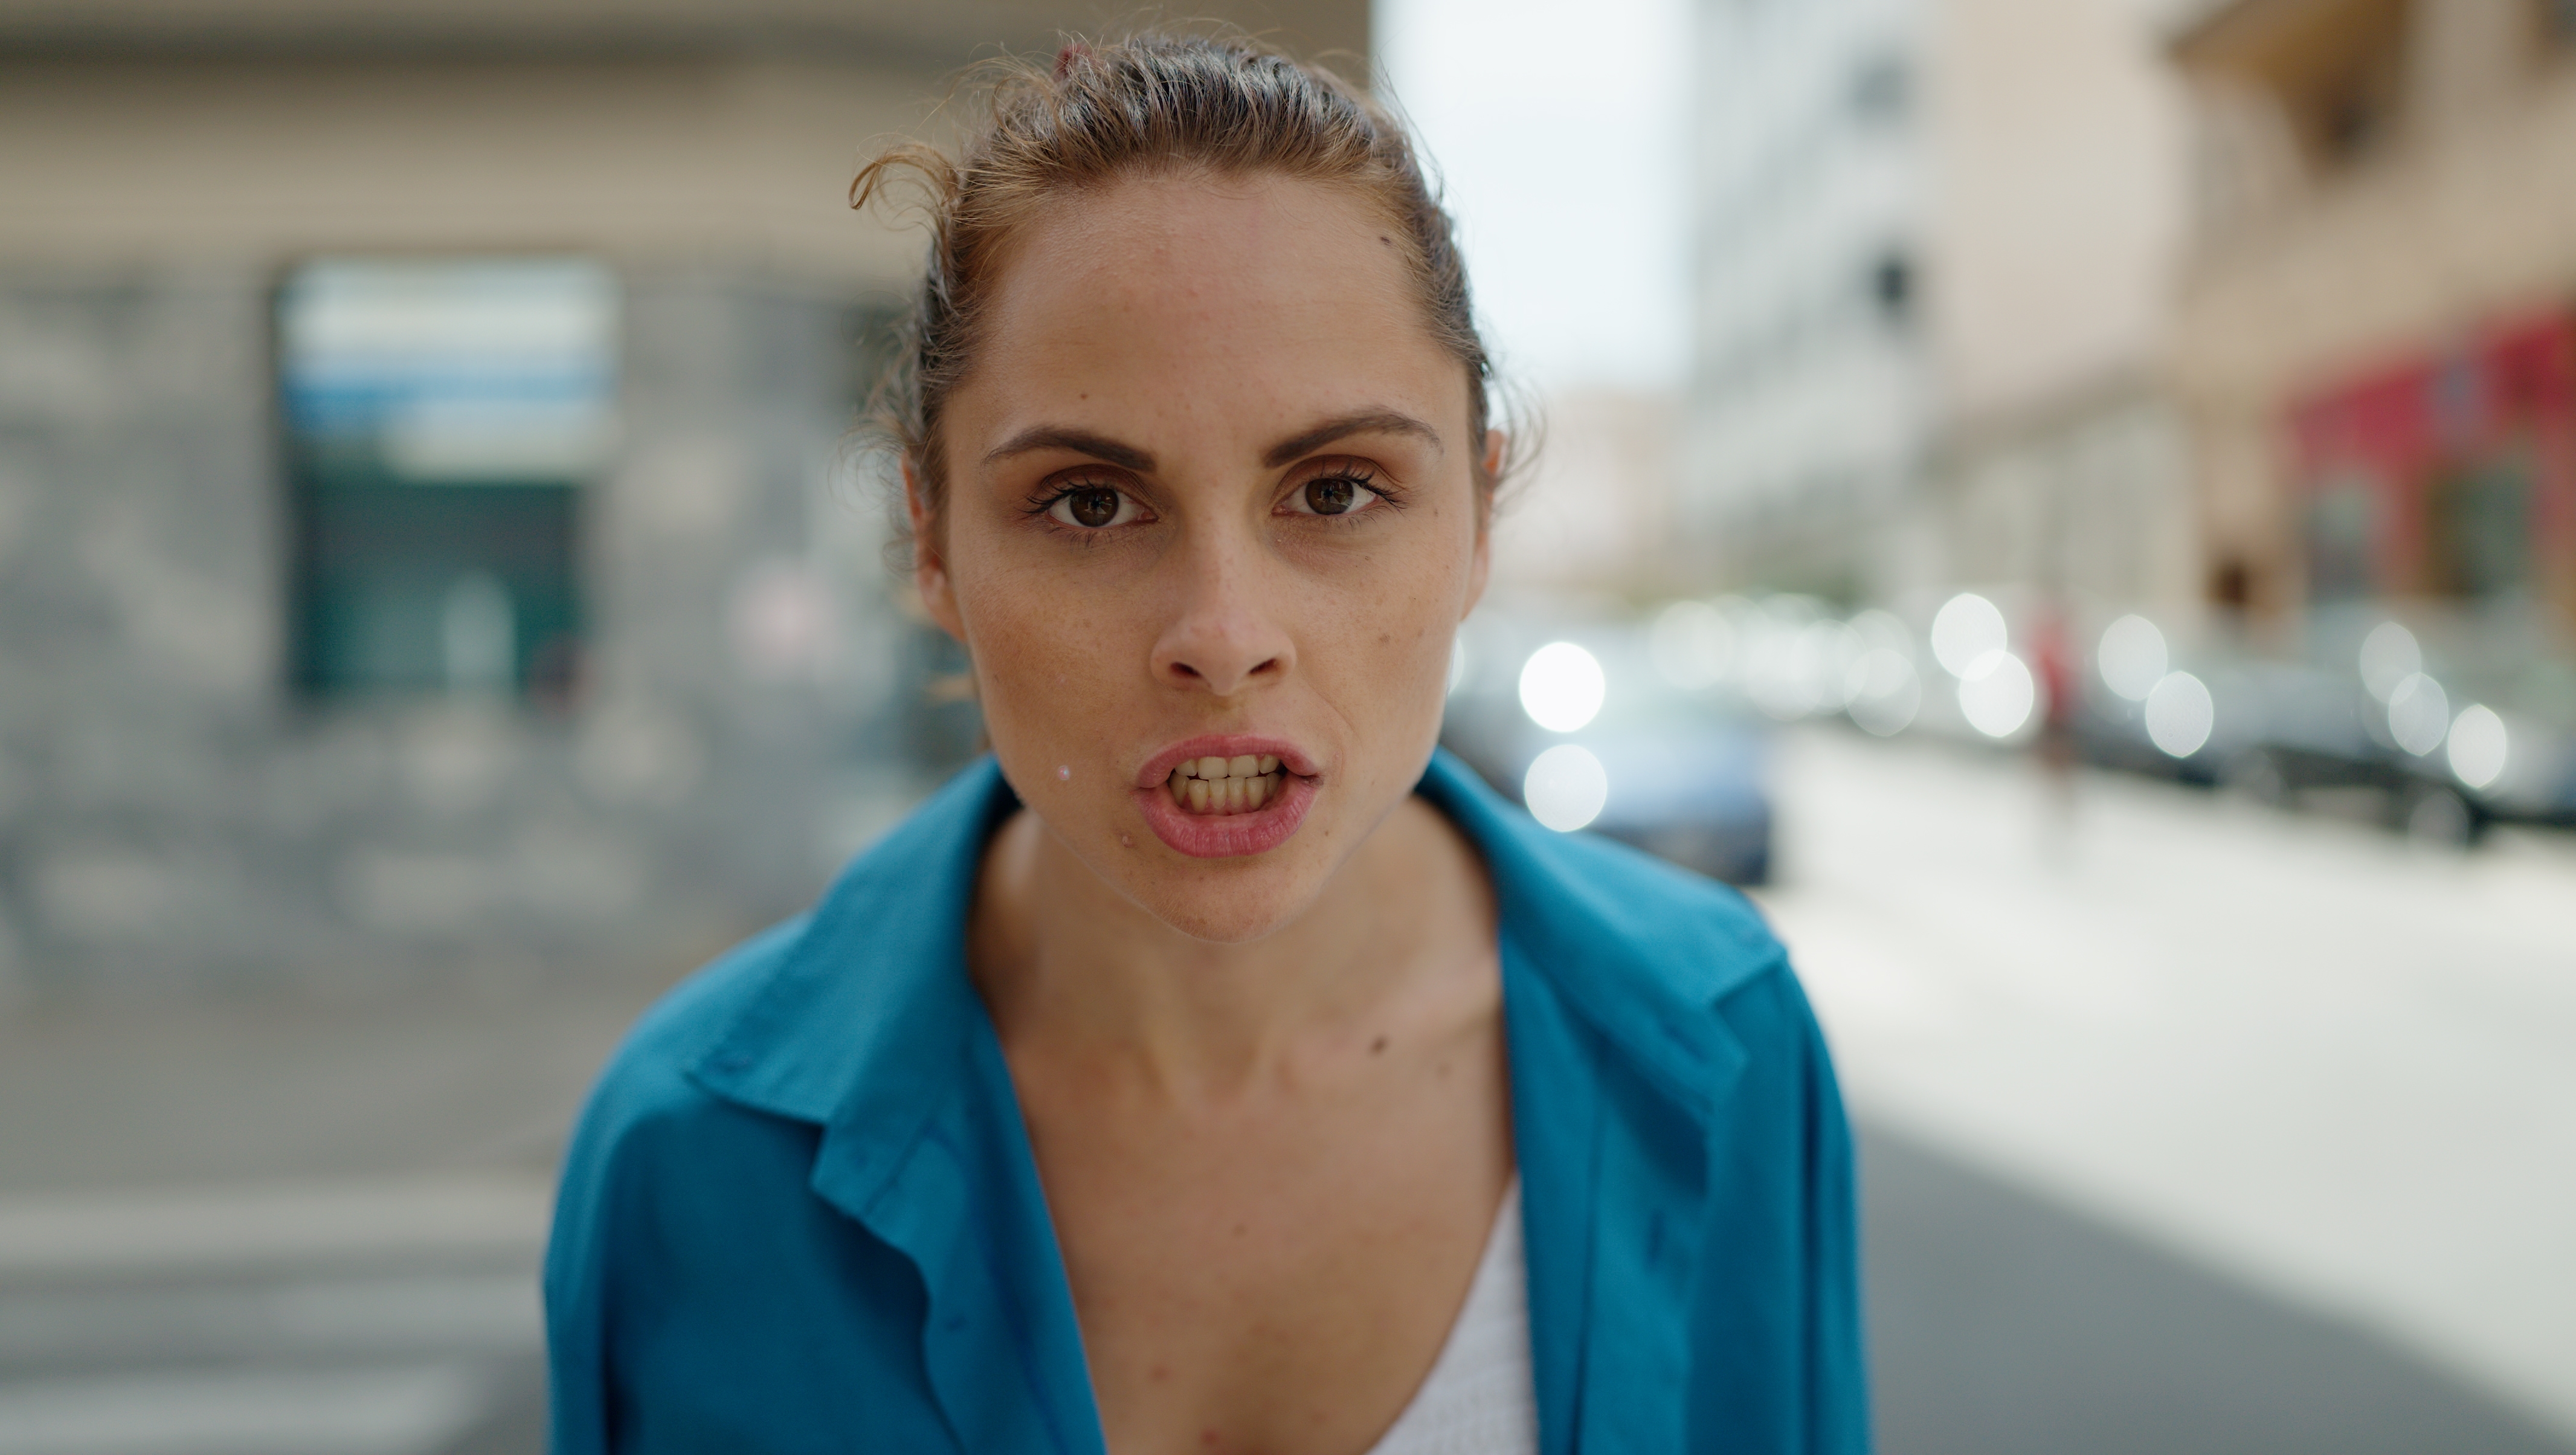 Mujer joven enfadada. | Fuente: Shutterstock